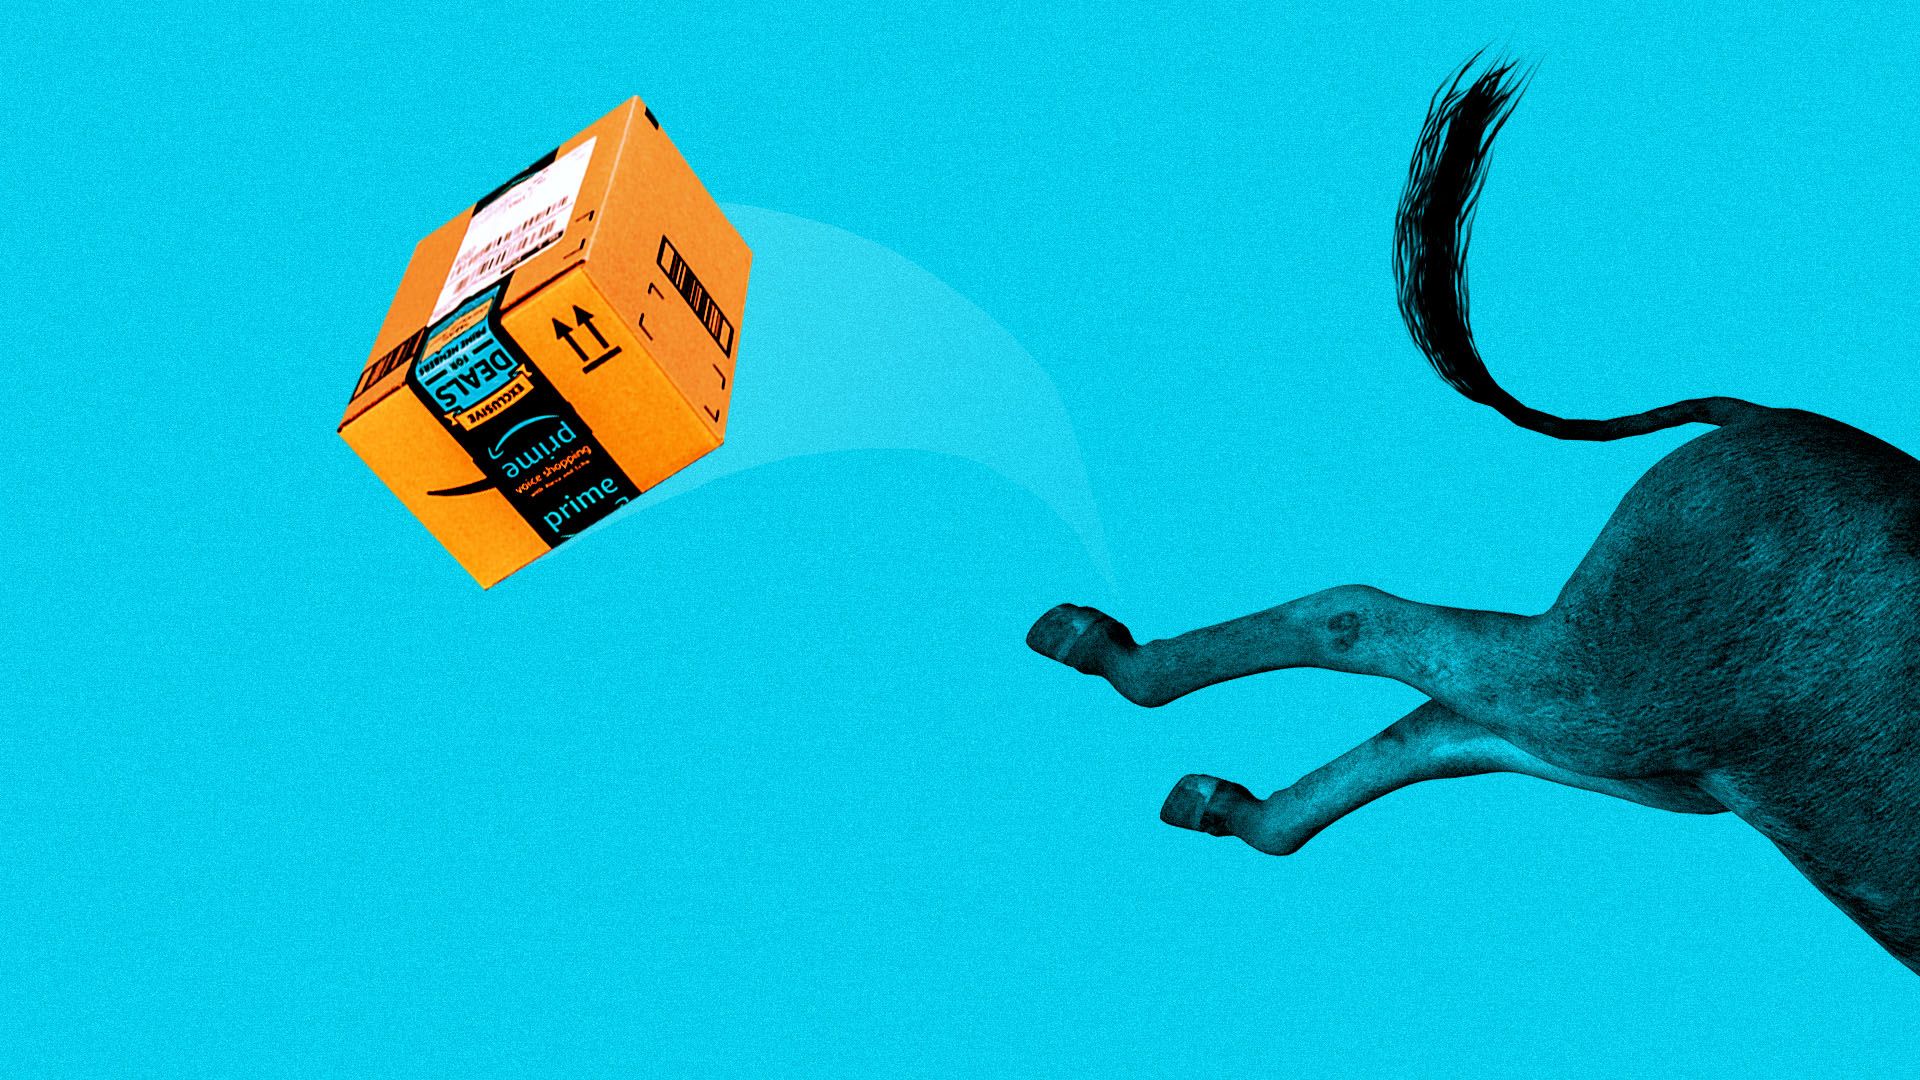 Illustration of donkey kicking an Amazon box